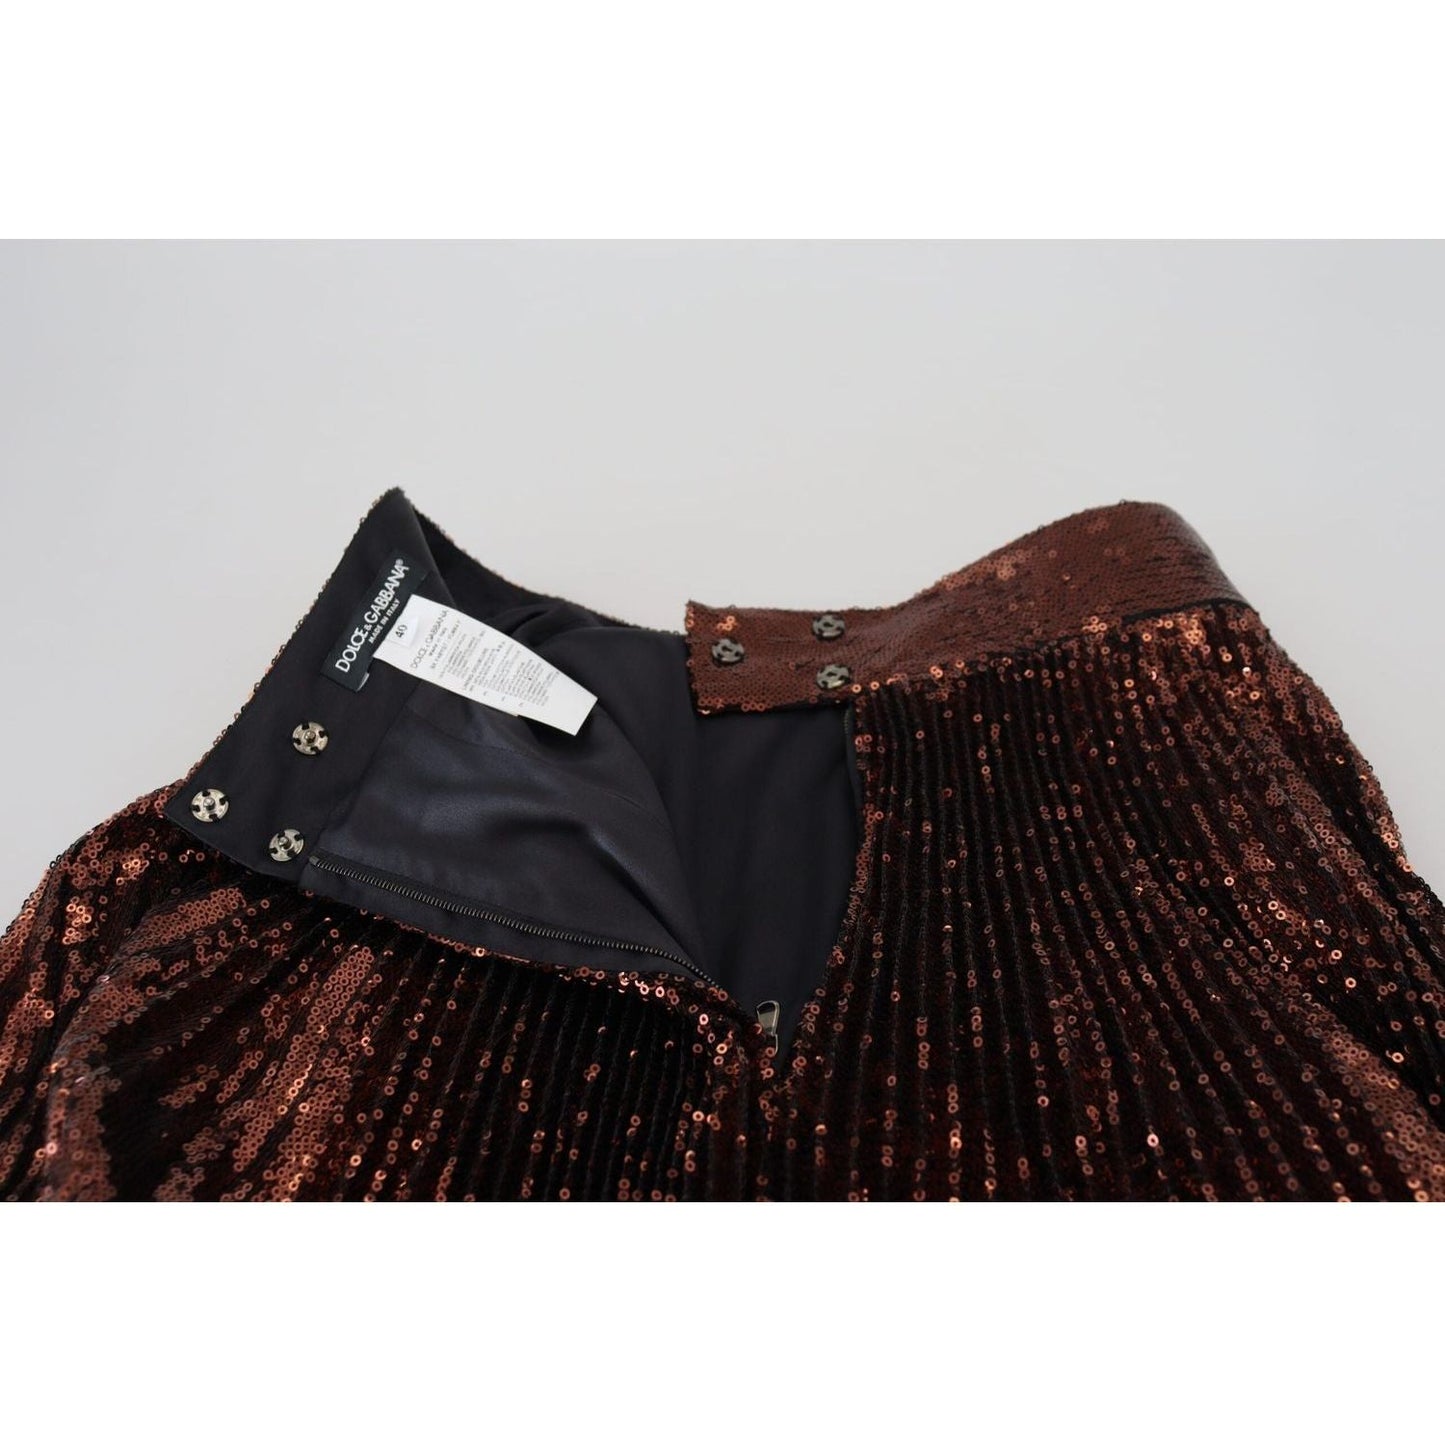 Dolce & Gabbana Elegant High Waist A-Line Midi Skirt bronze-sequined-high-waist-a-line-maxi-skirt